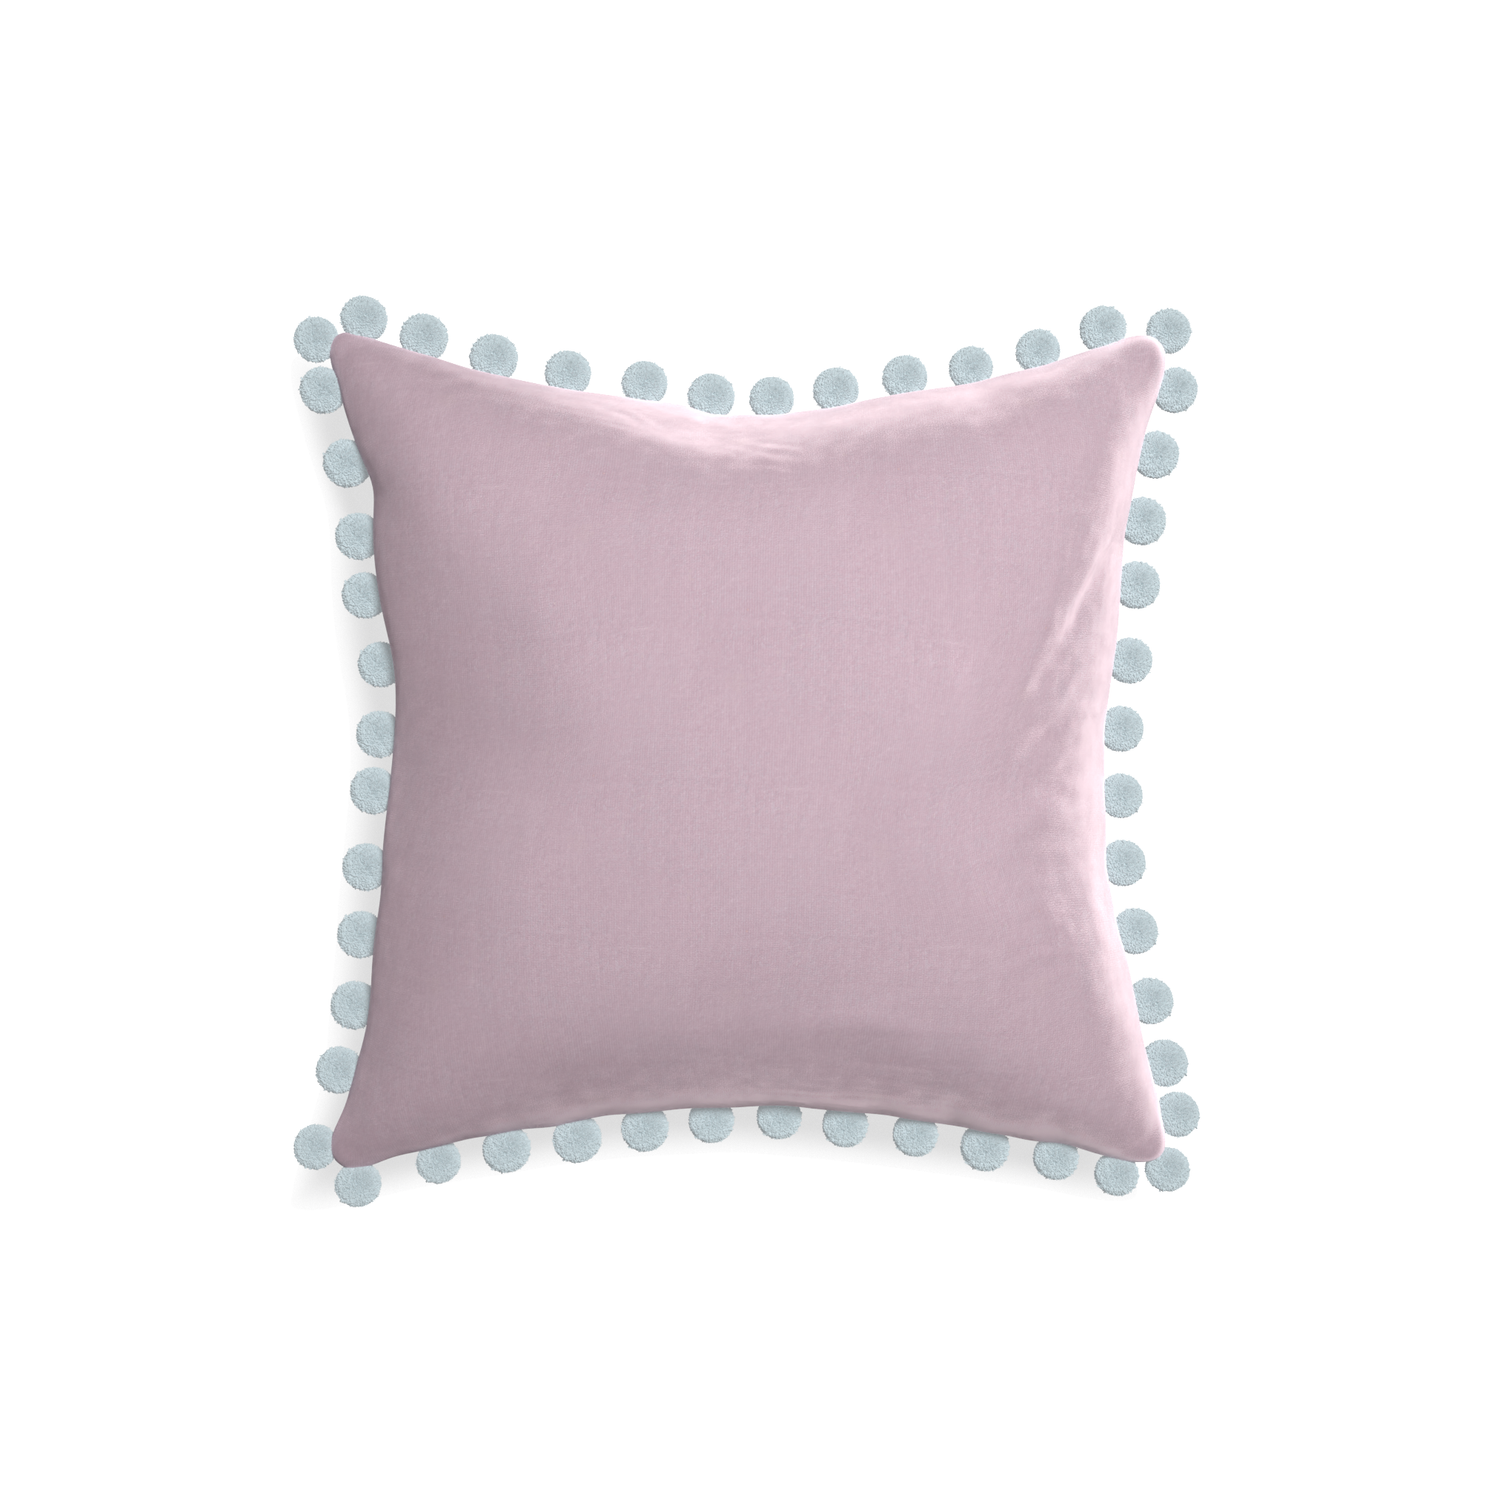 square lilac velvet pillow with light blue pom poms